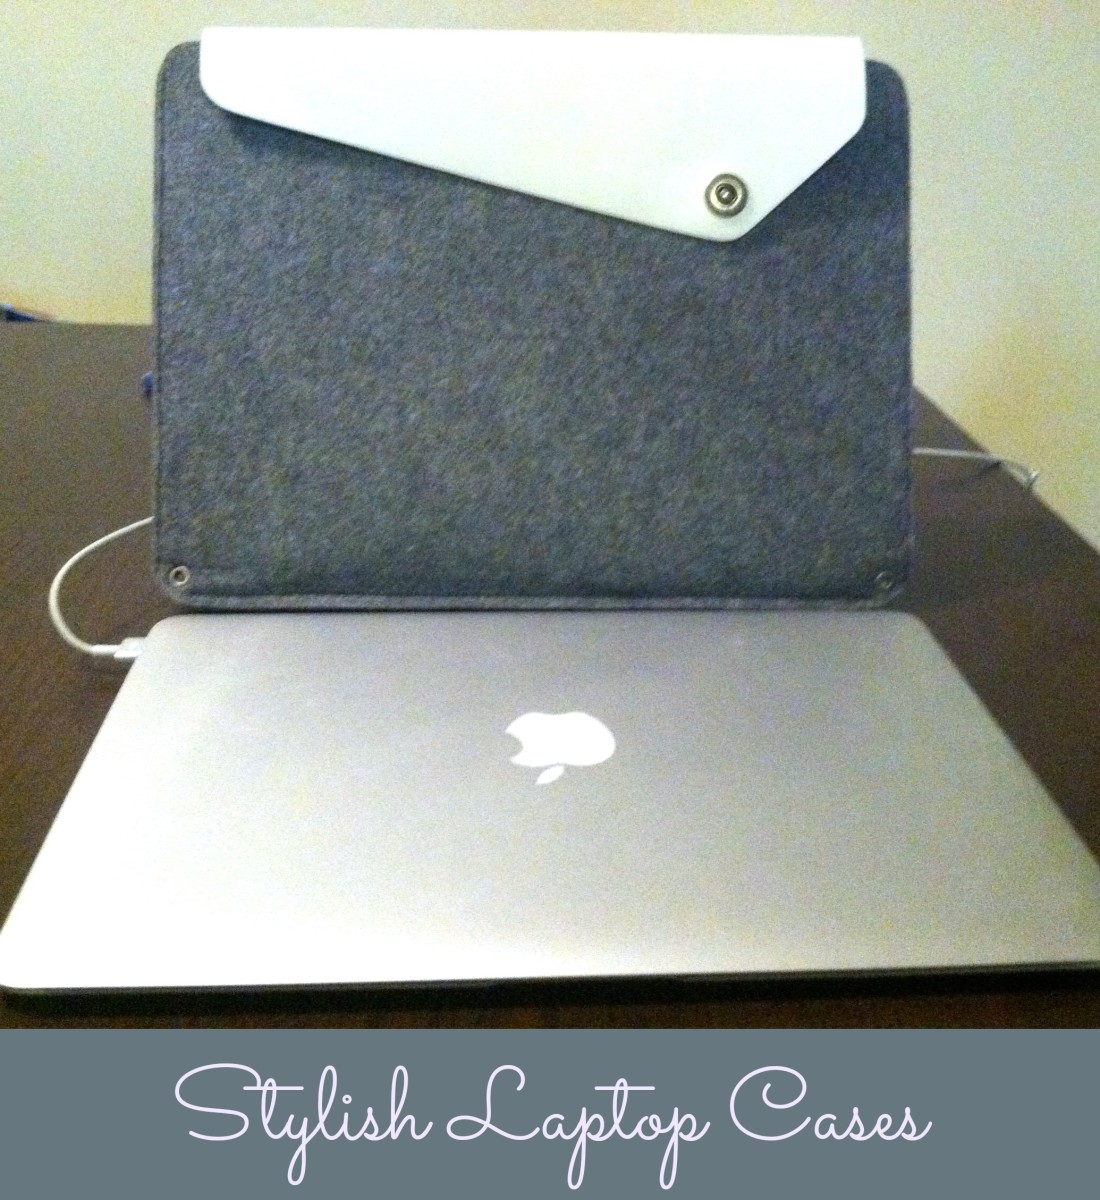 Laptop Cases